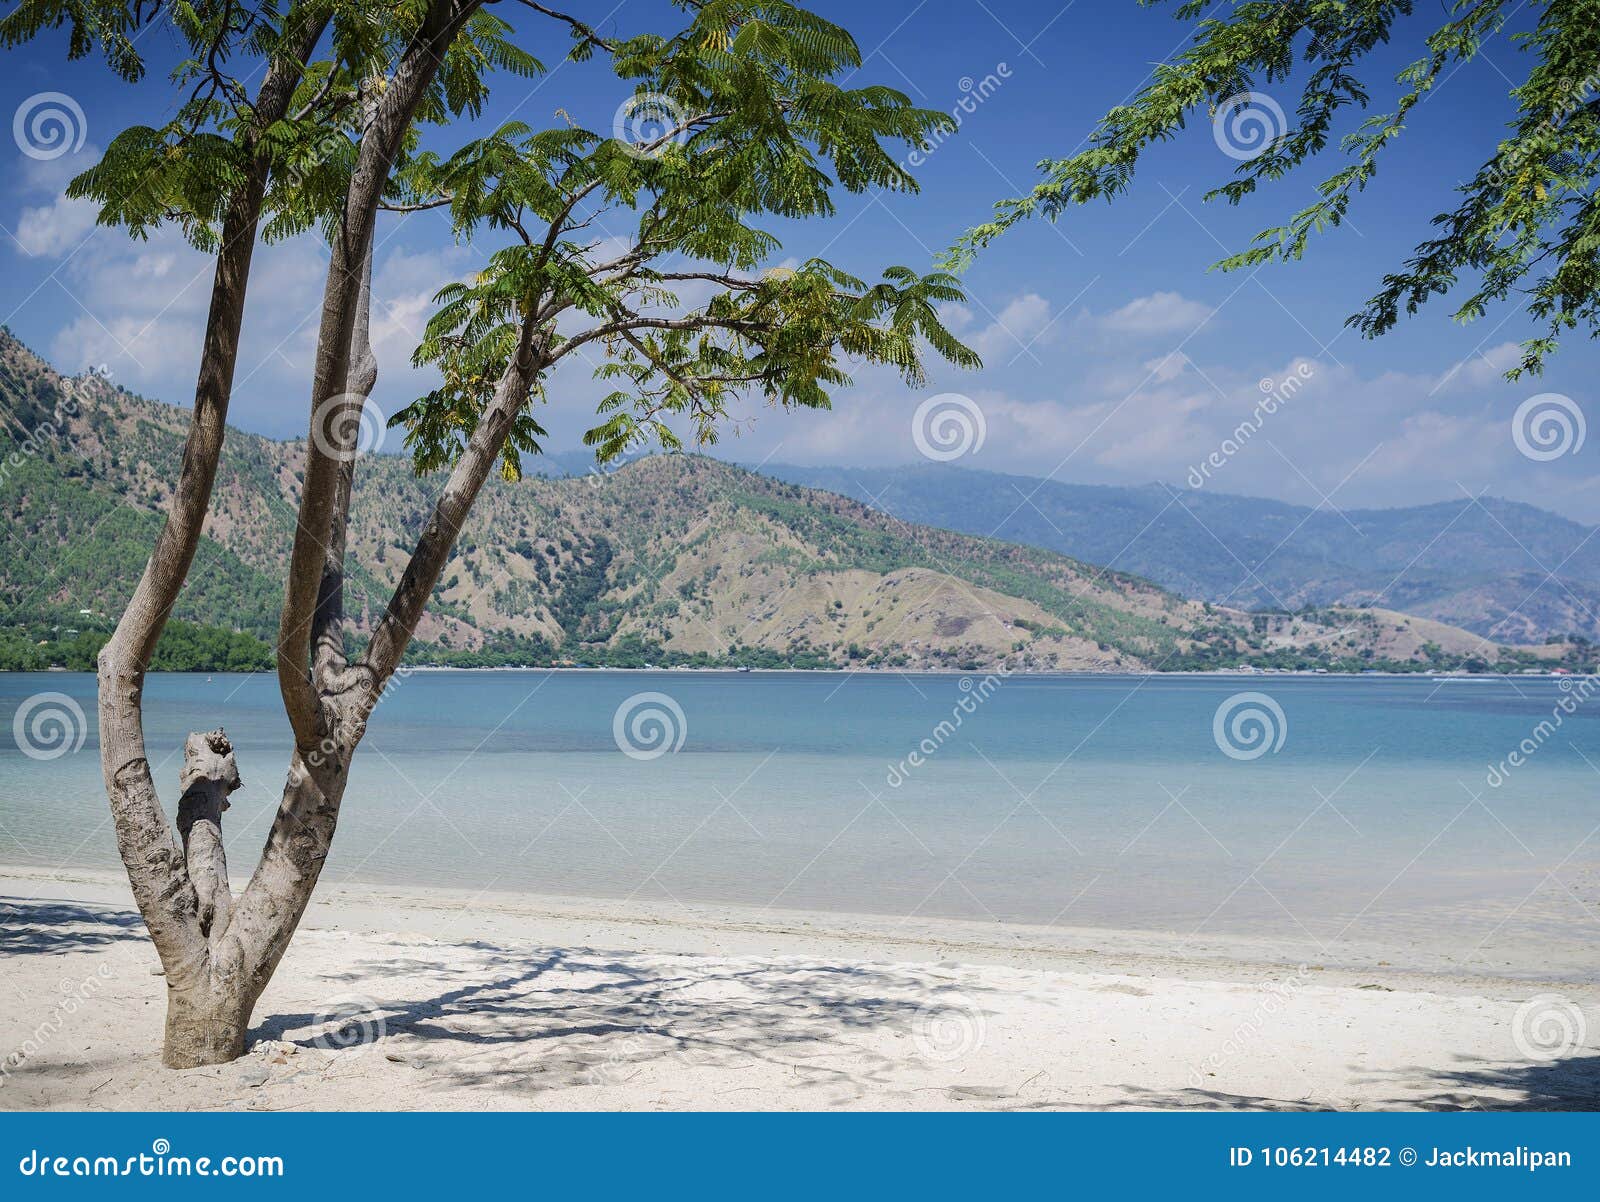 areia branca tropical beach view near dili in east timor